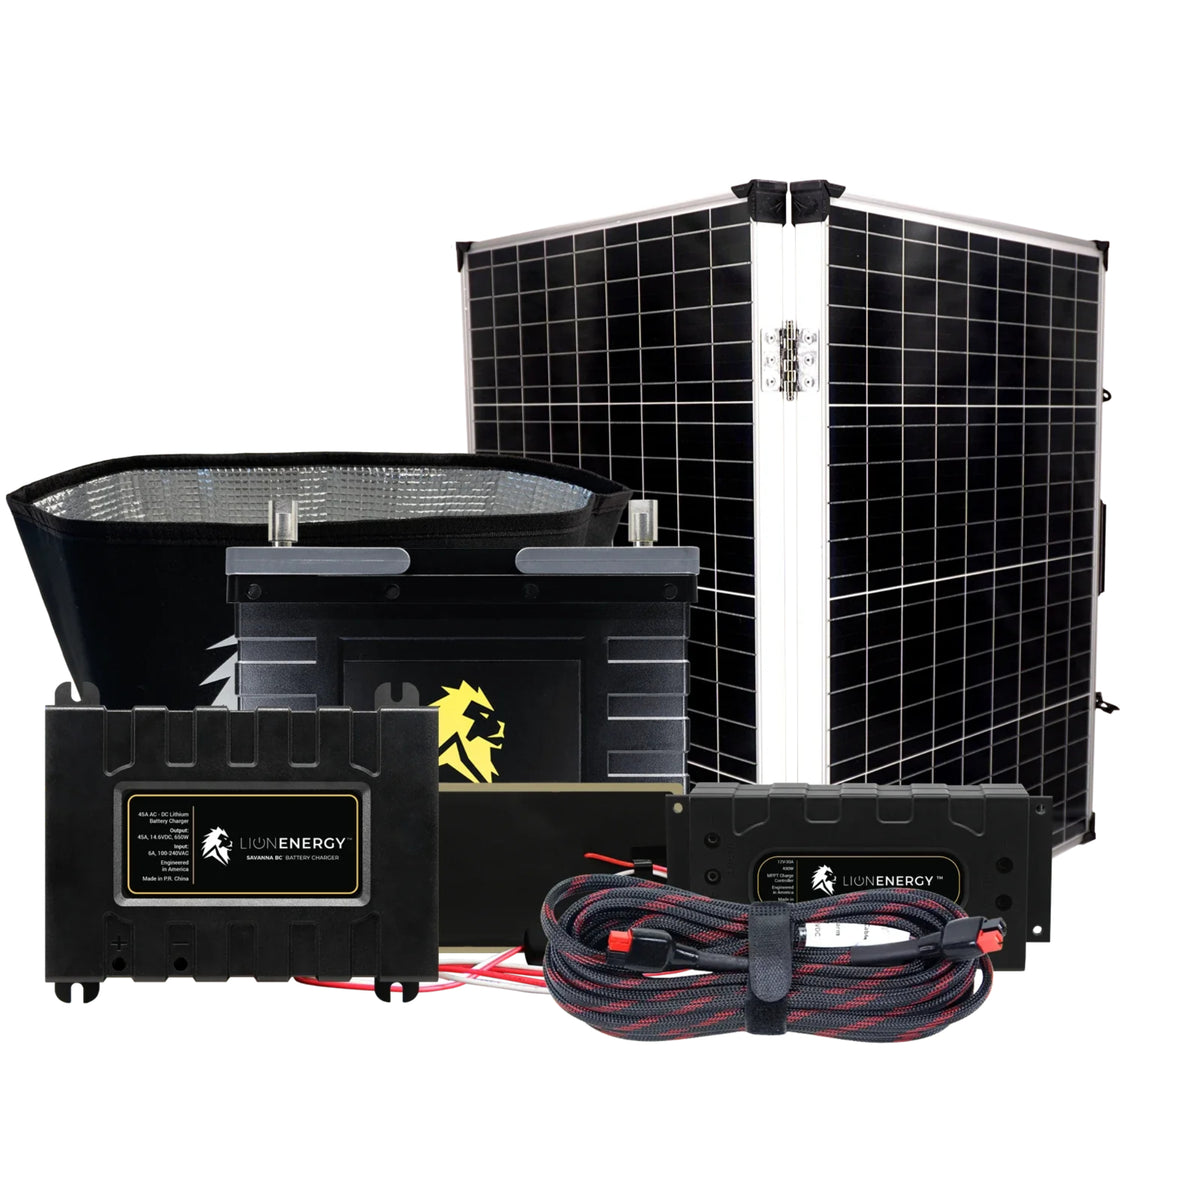 Lion Energy | 12V 105Ah Solar Power System | Build Your Own Kit